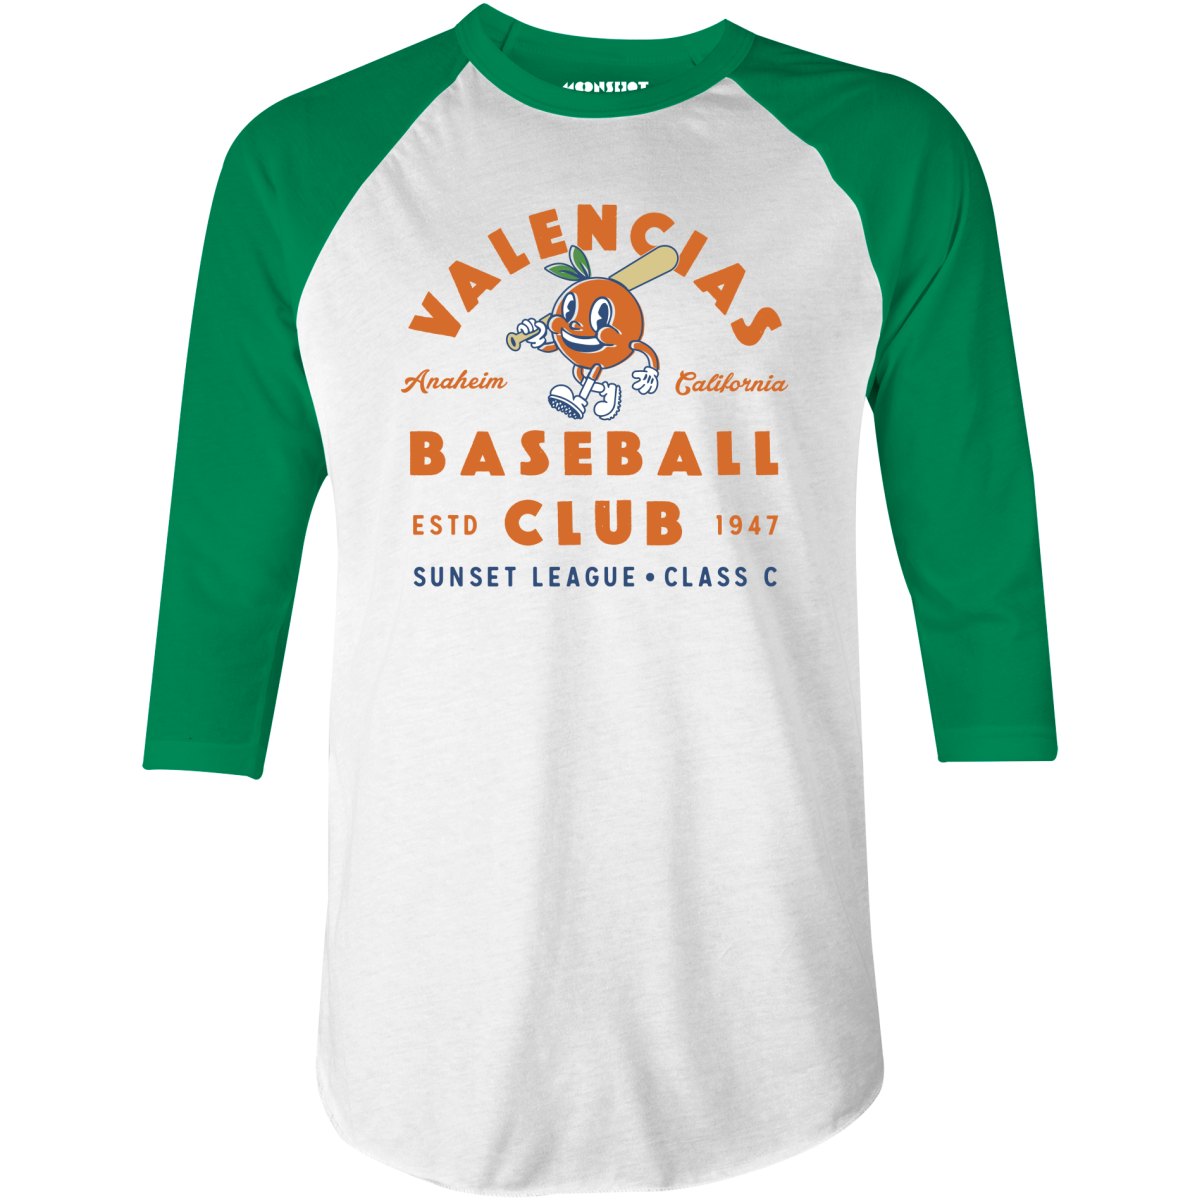 Anaheim Valencias - California - Vintage Defunct Baseball Teams - 3/4 Sleeve Raglan T-Shirt